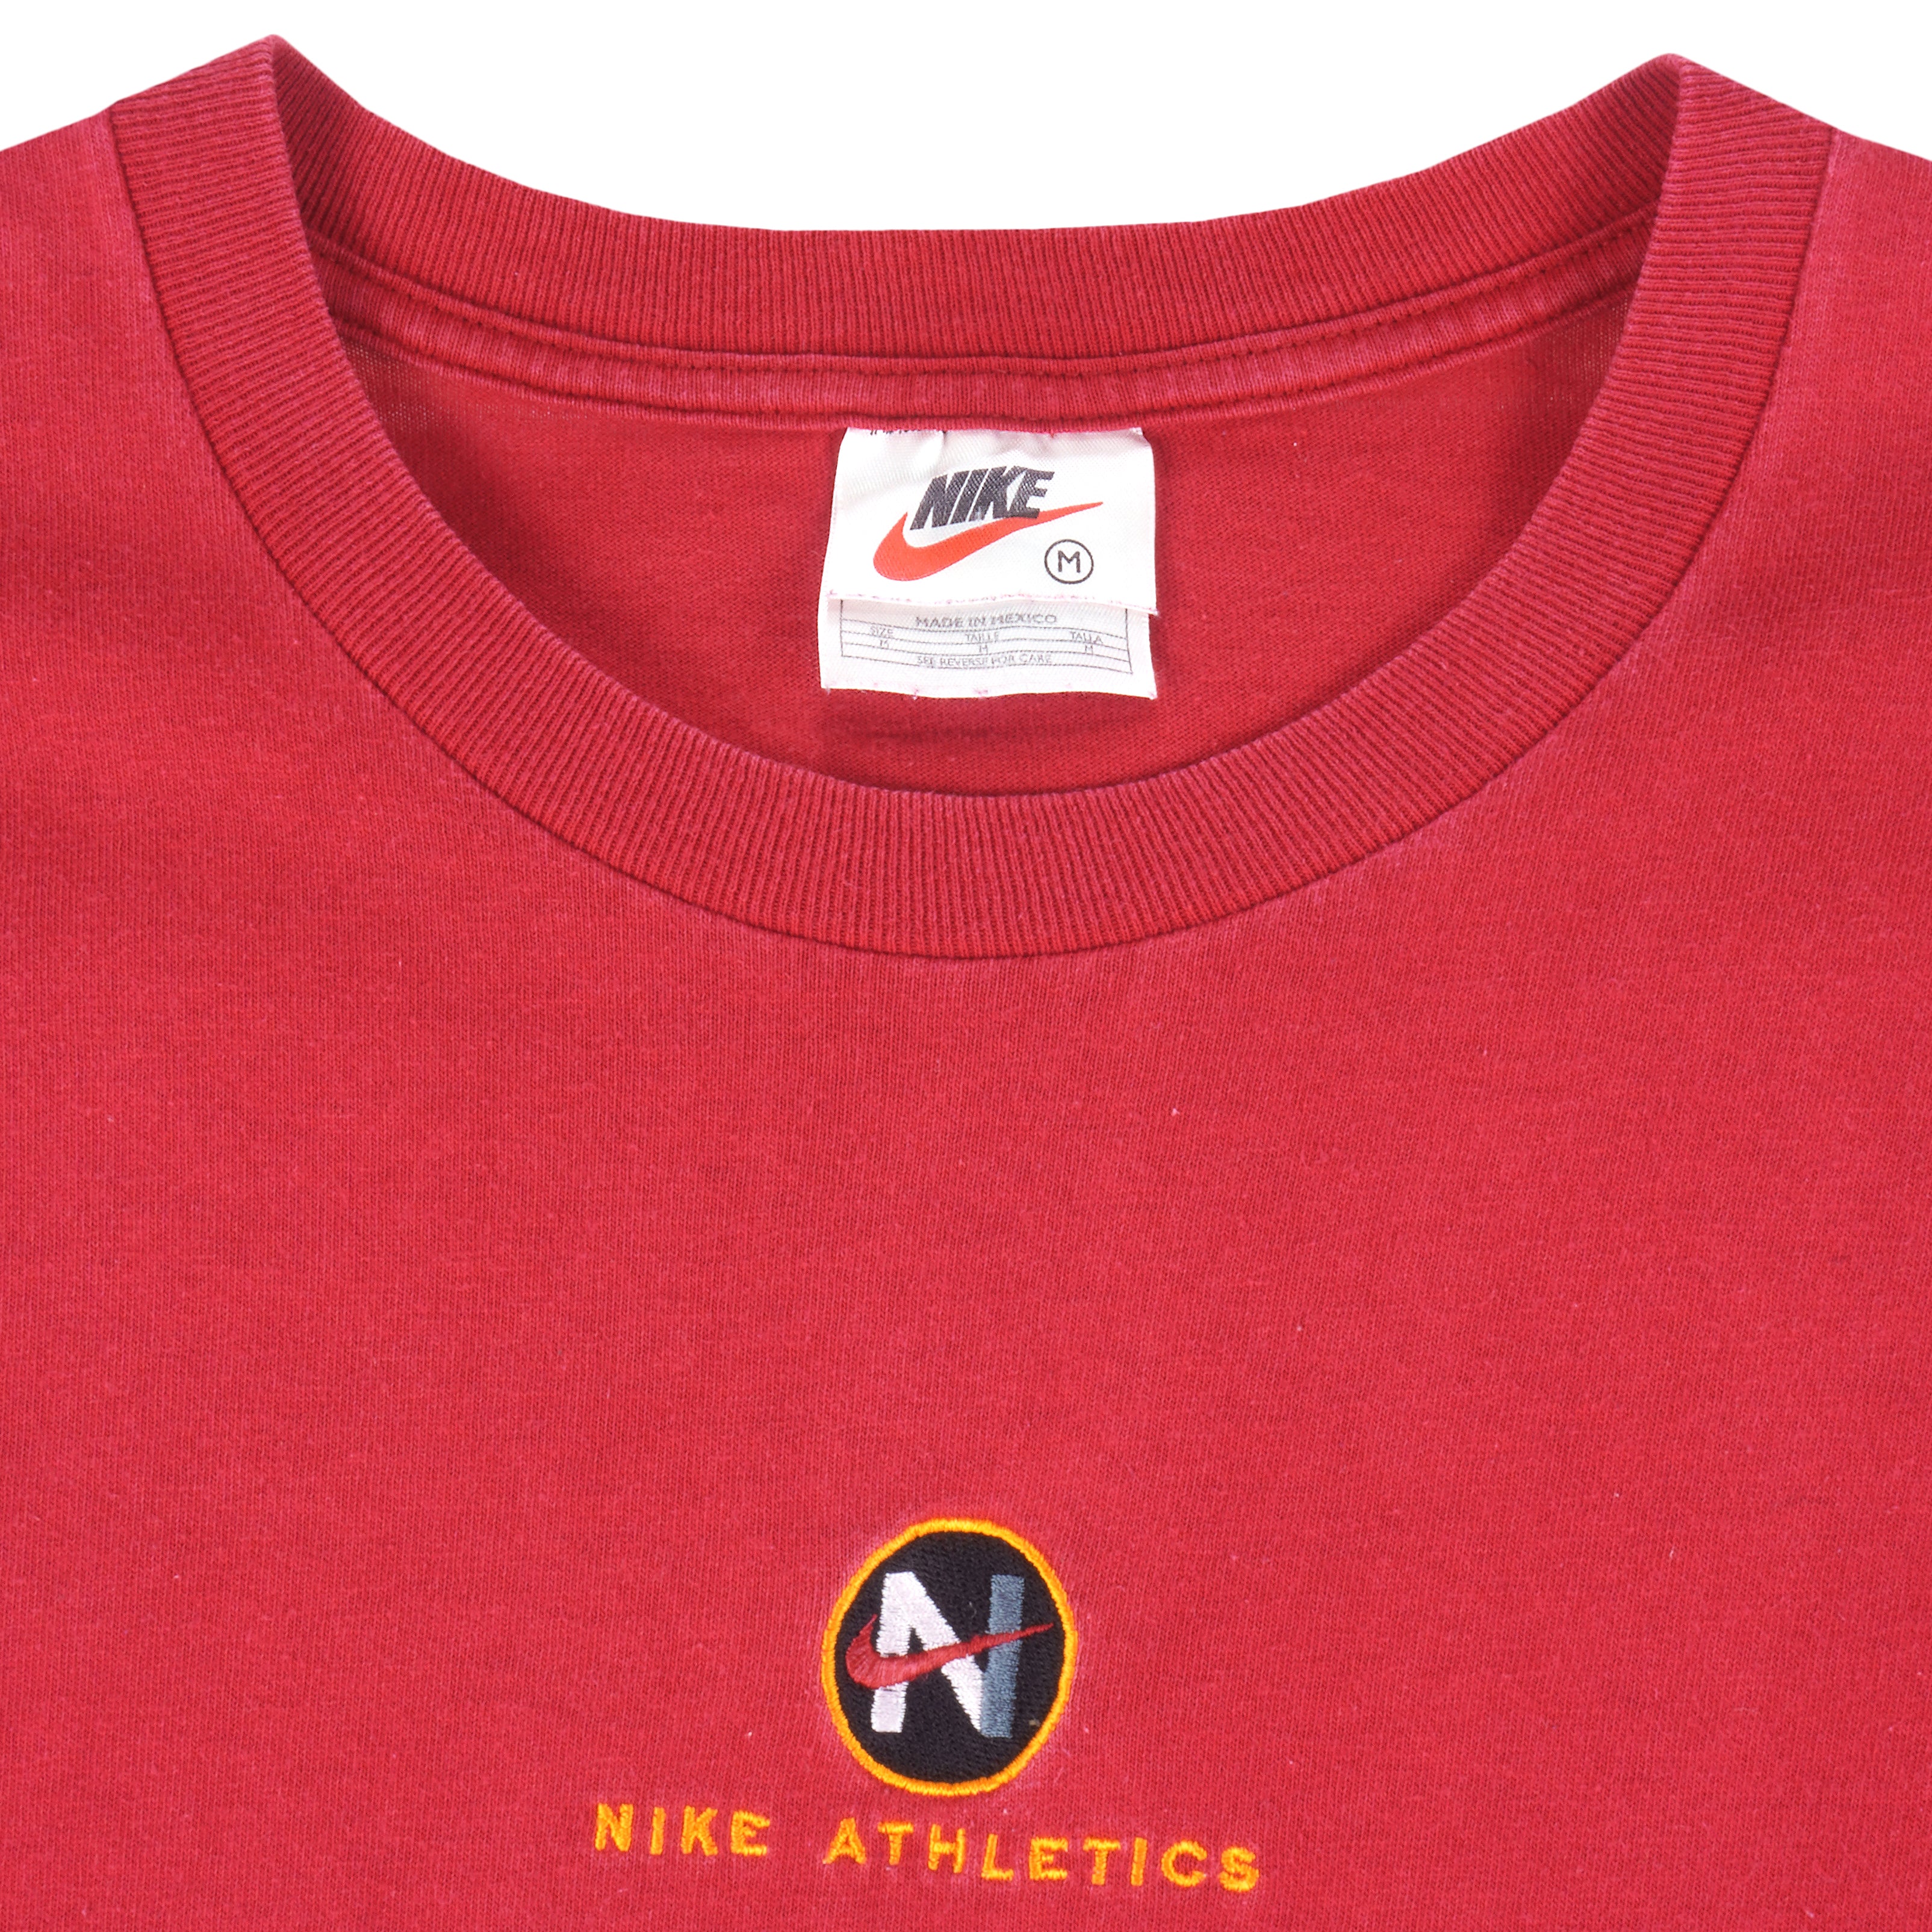 vintage nike athletics shirt